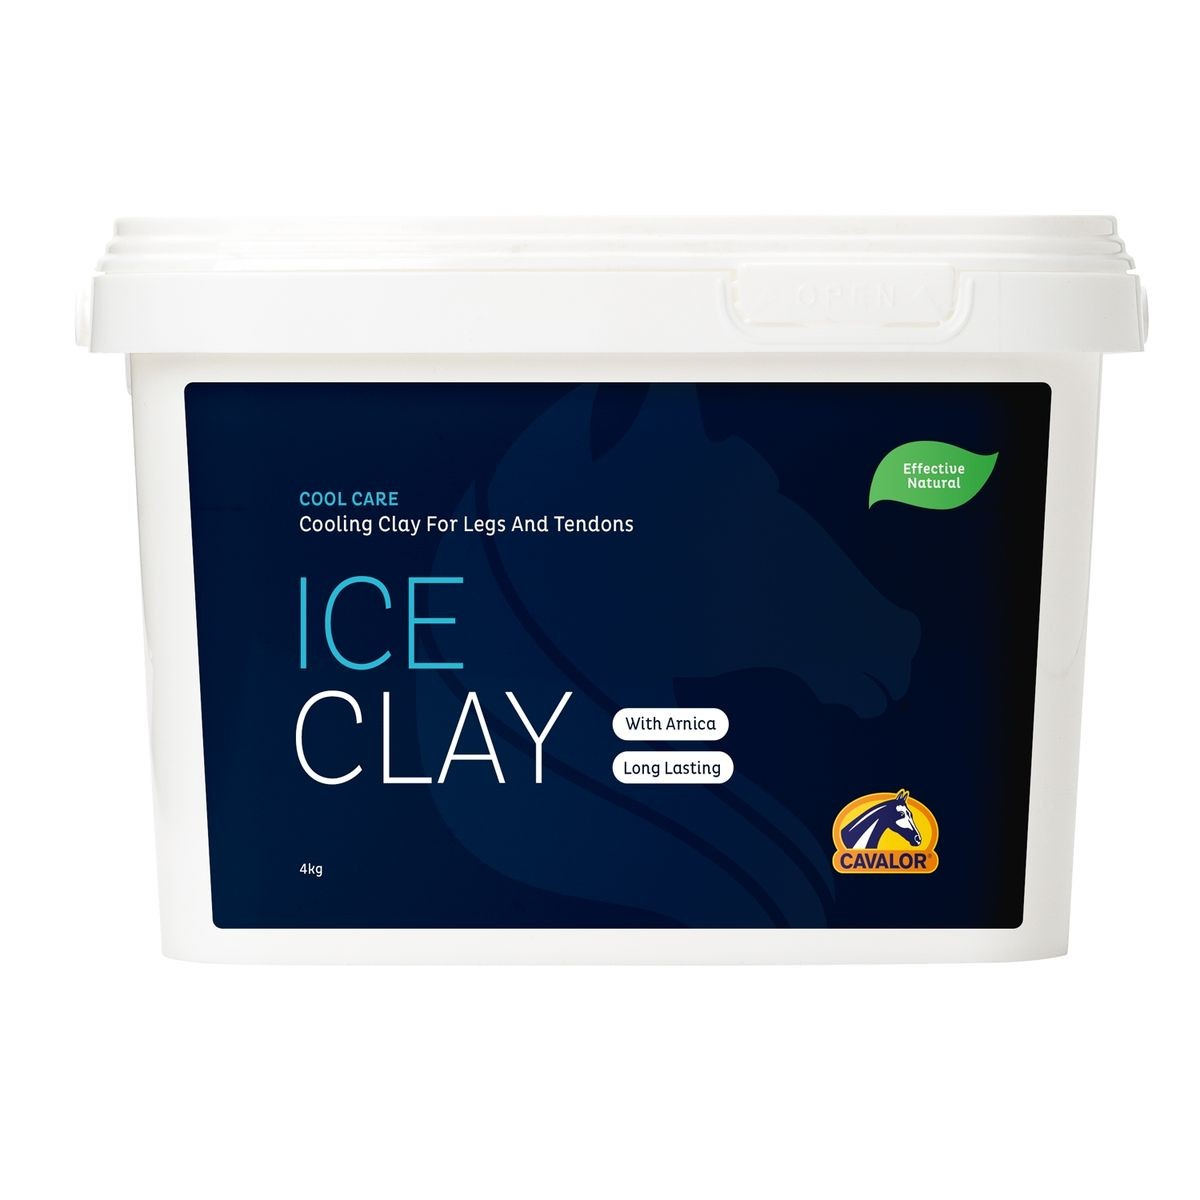 Cavalor Ice Clay argila natural para cavalos